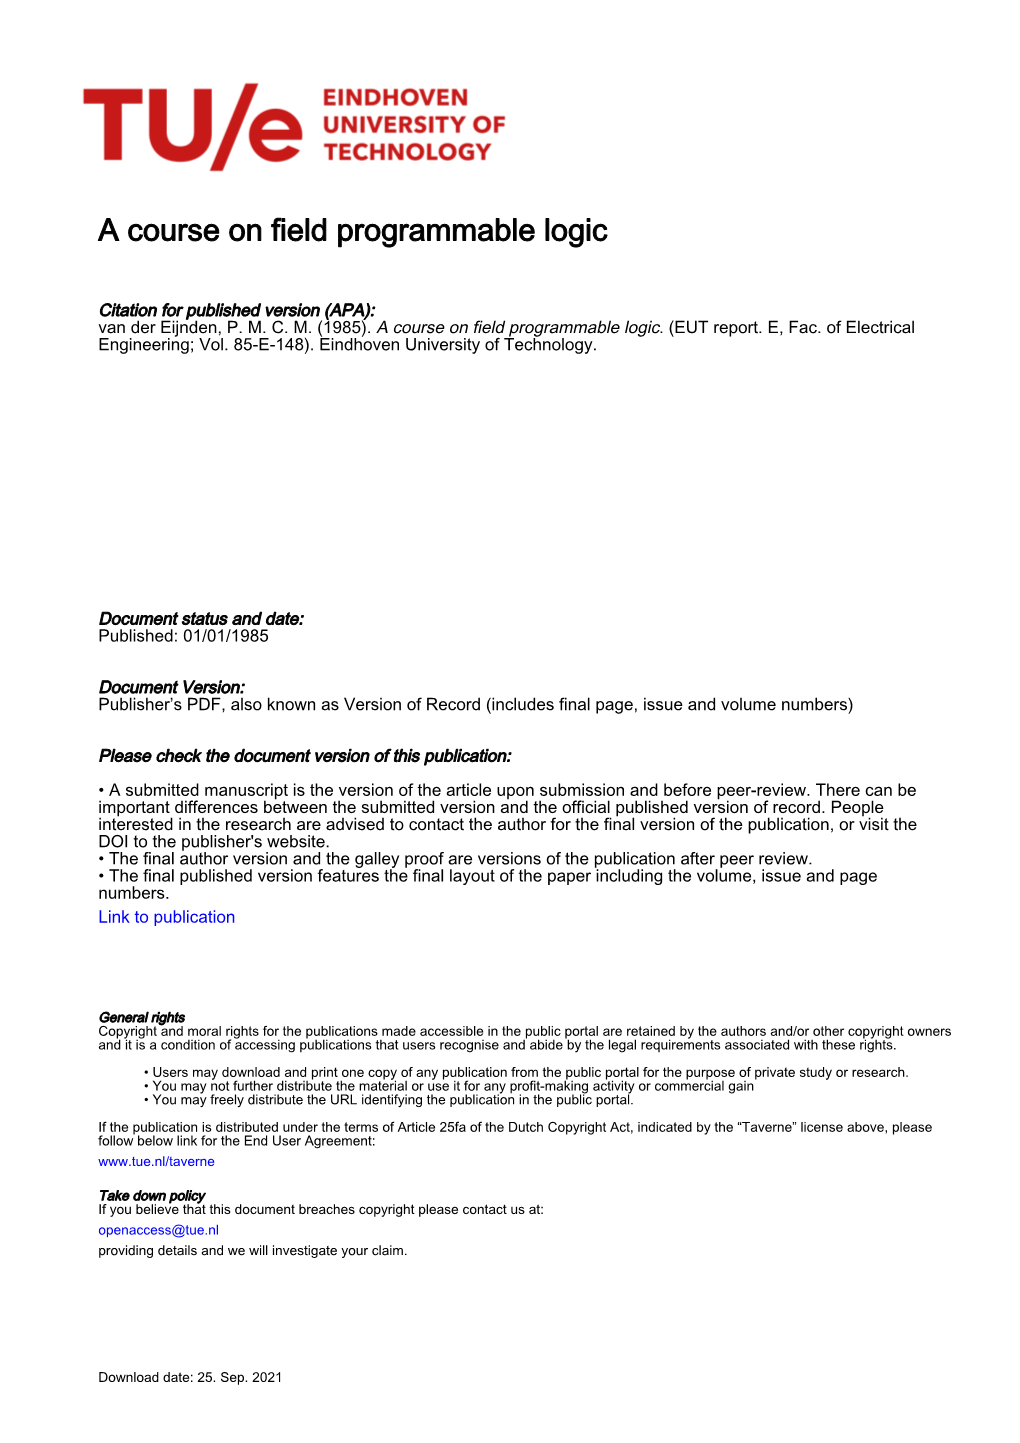 A Course on Field Programmable Logic